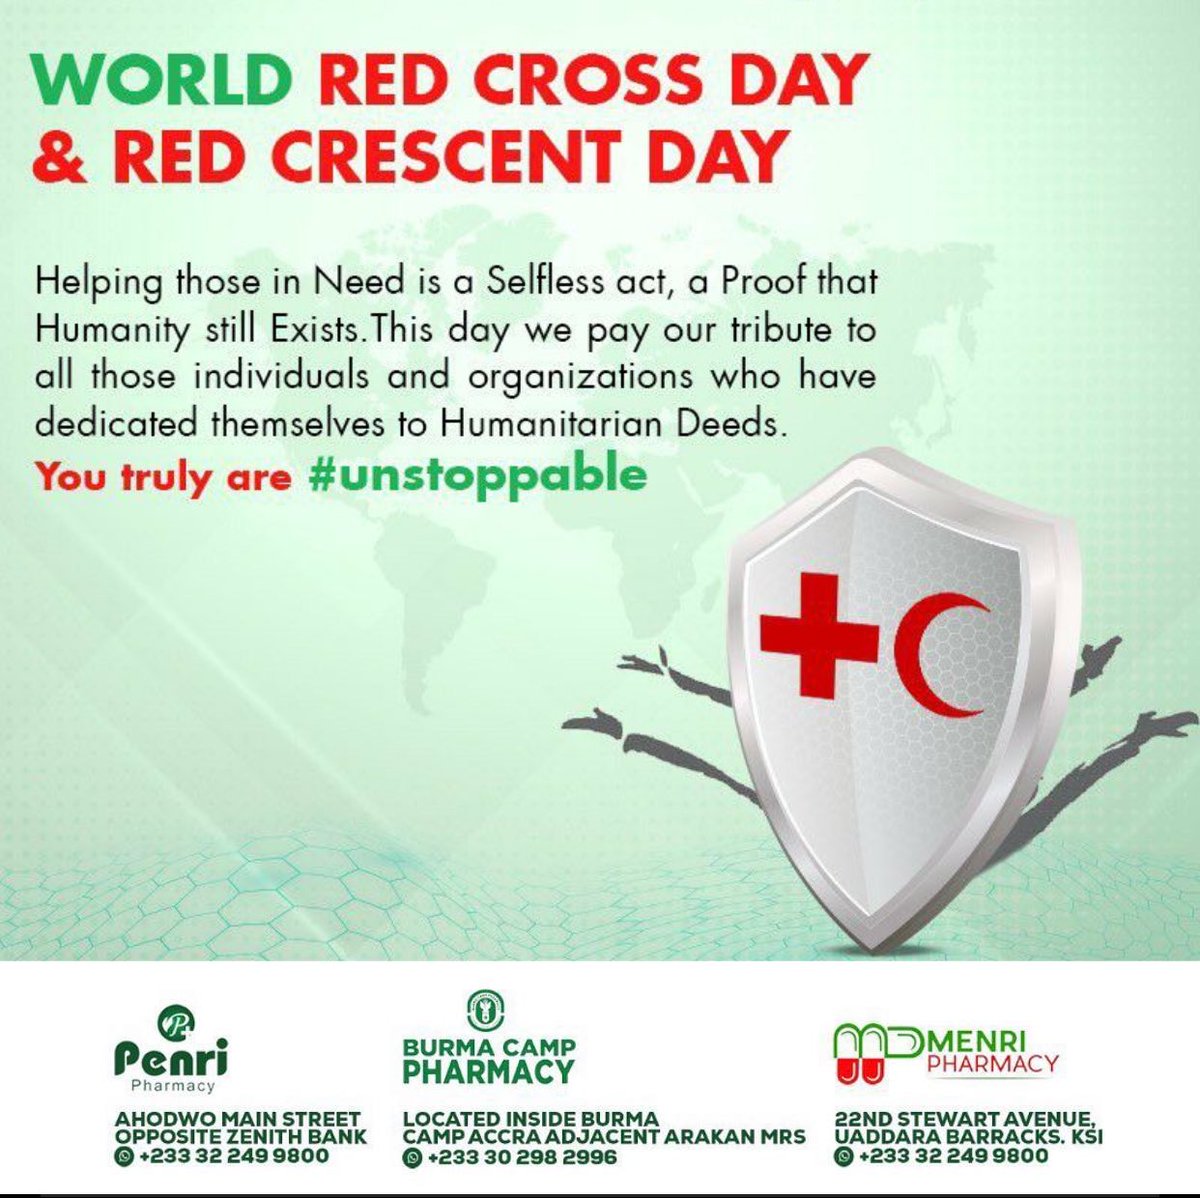 Menri Monday 

#WorldRedCrossAndRedCrescentDay